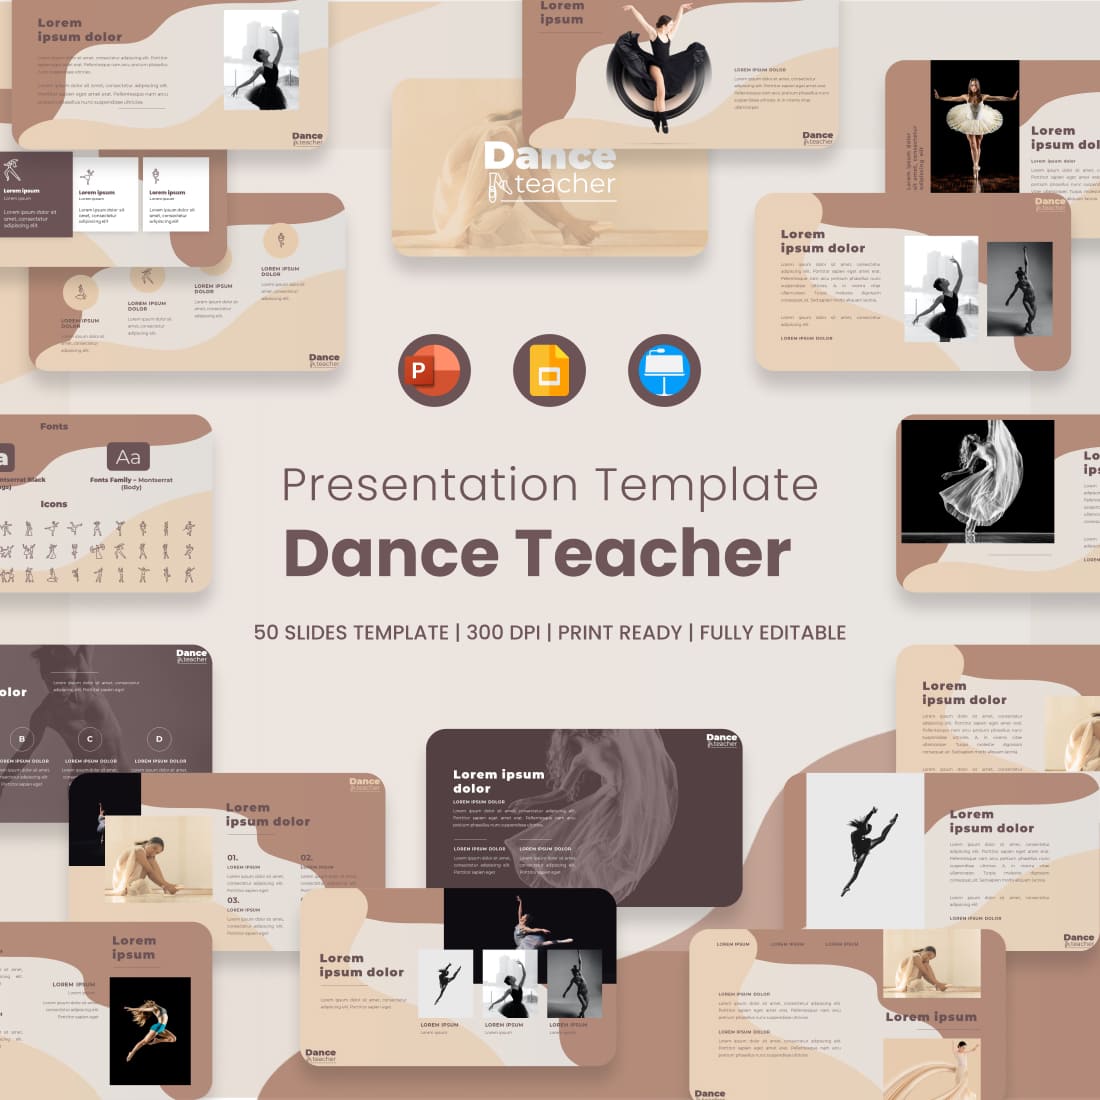 Danceteacher presentation template cover image.